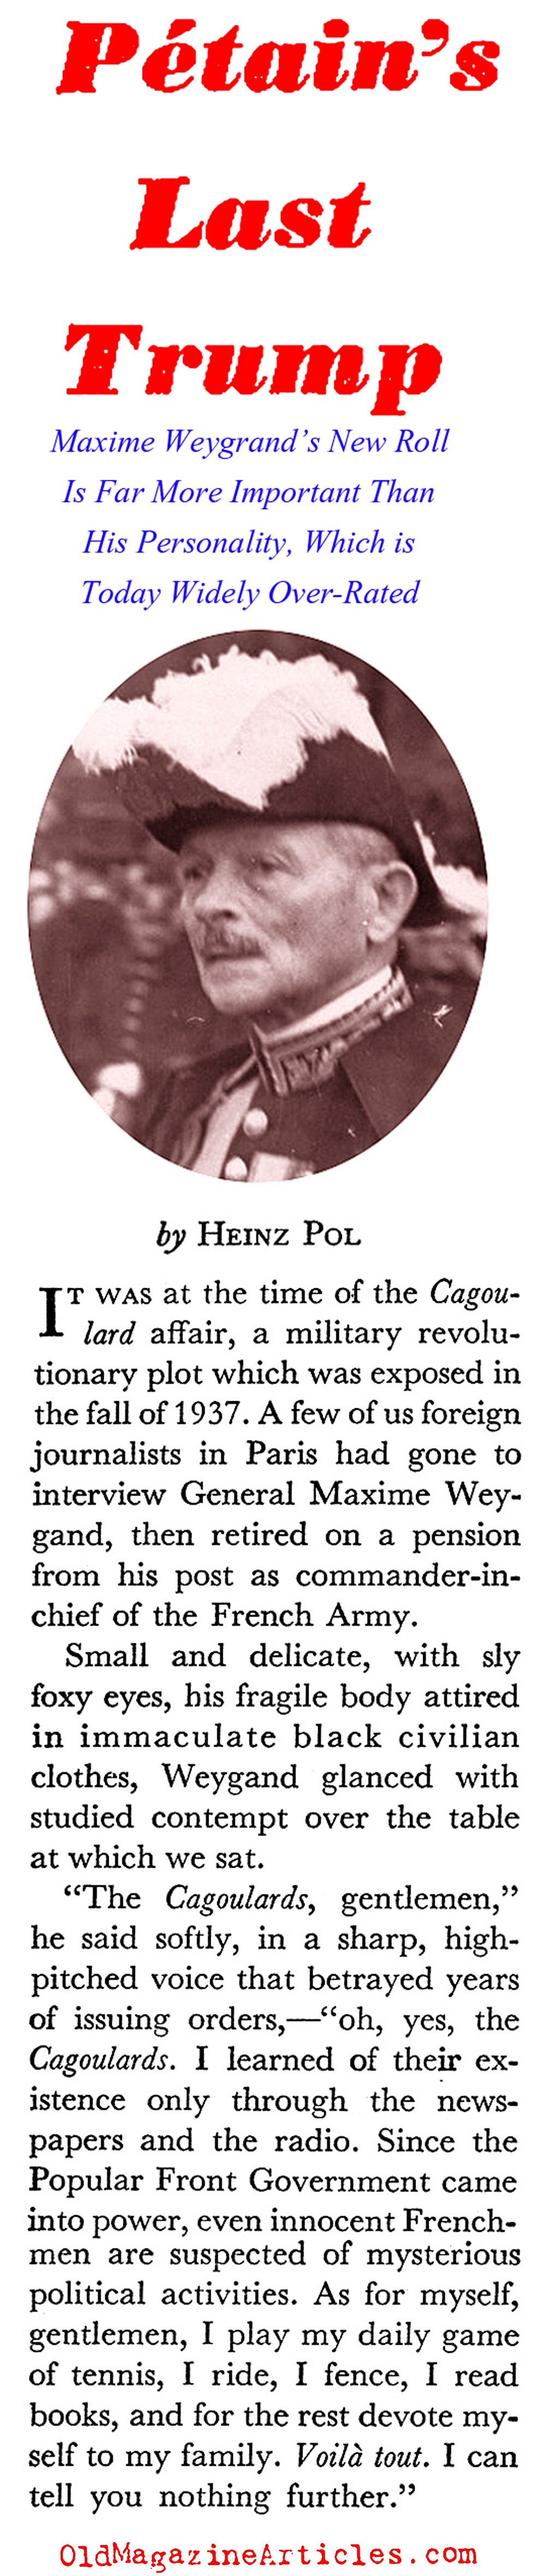 The General Who Failed France (Coronet Magazine, 1941)